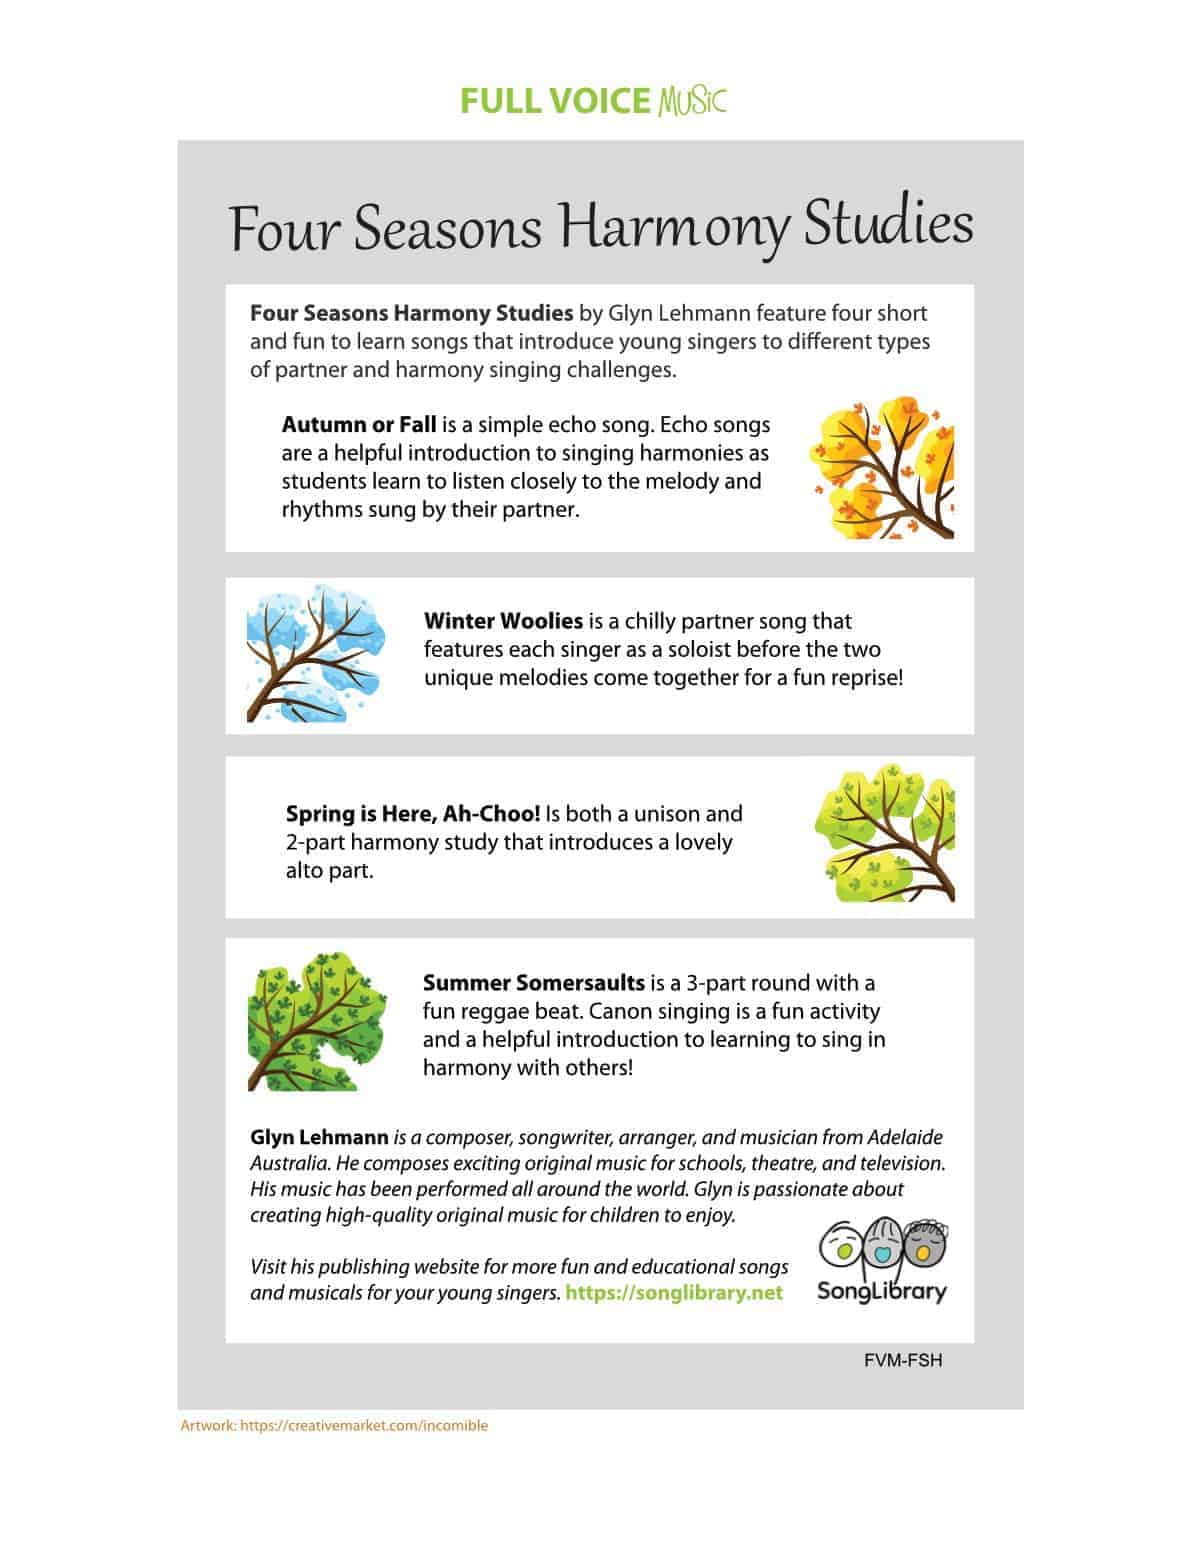 Four Seasons Harmony Studies by Glyn Lehmann